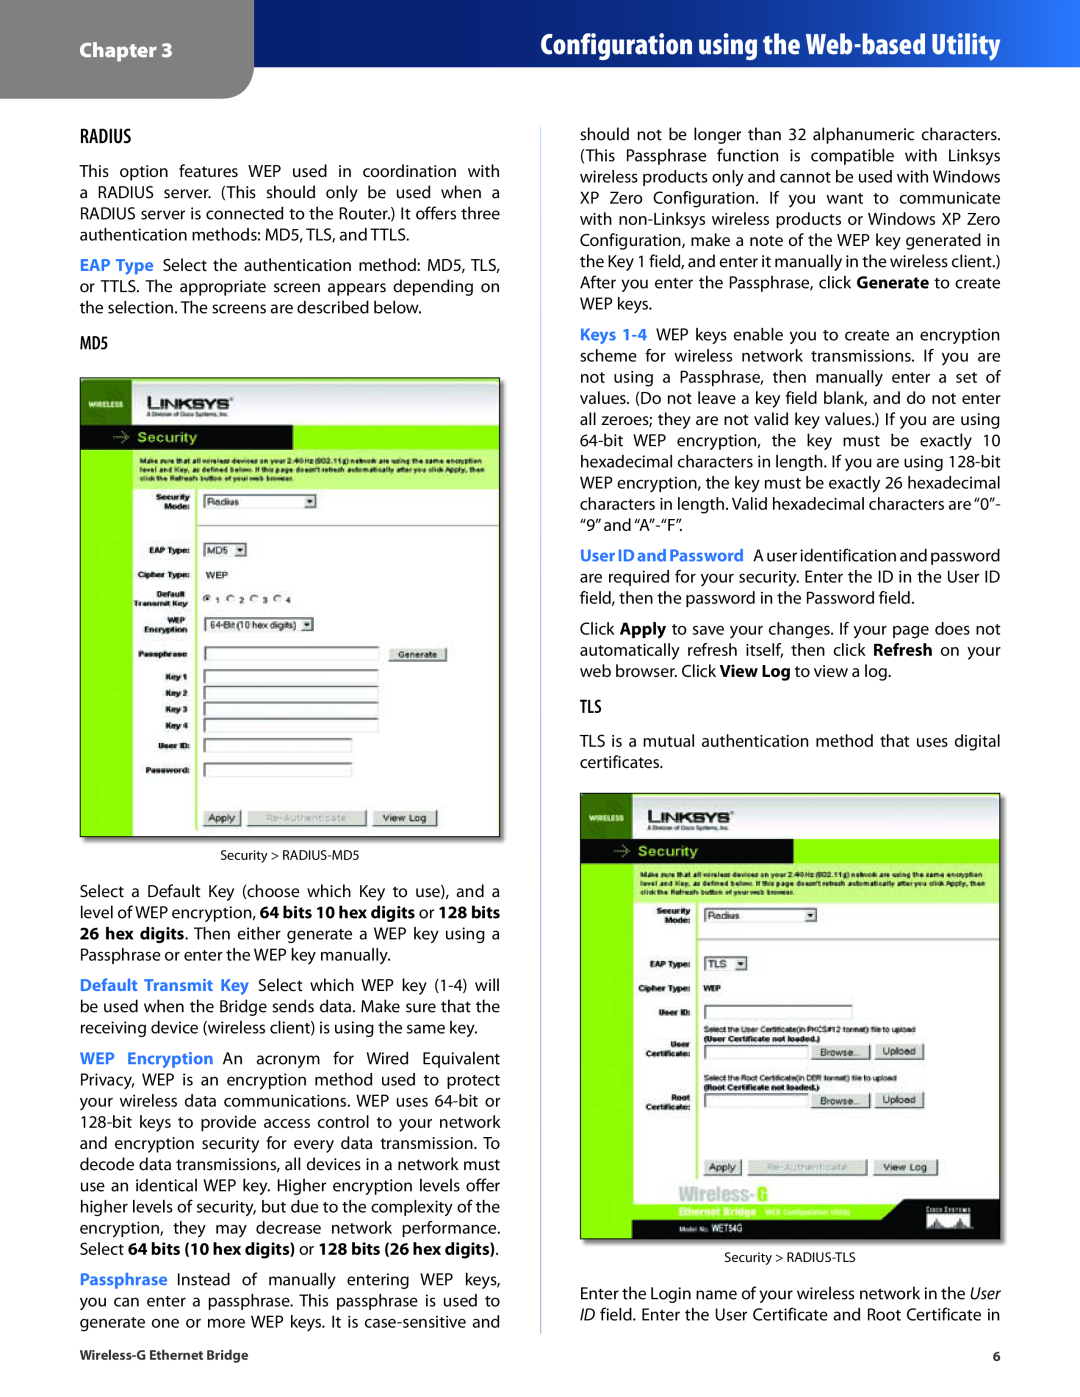 Cisco Systems WET54G manual Radius, Configuration using the Web-based Utility, Chapter 